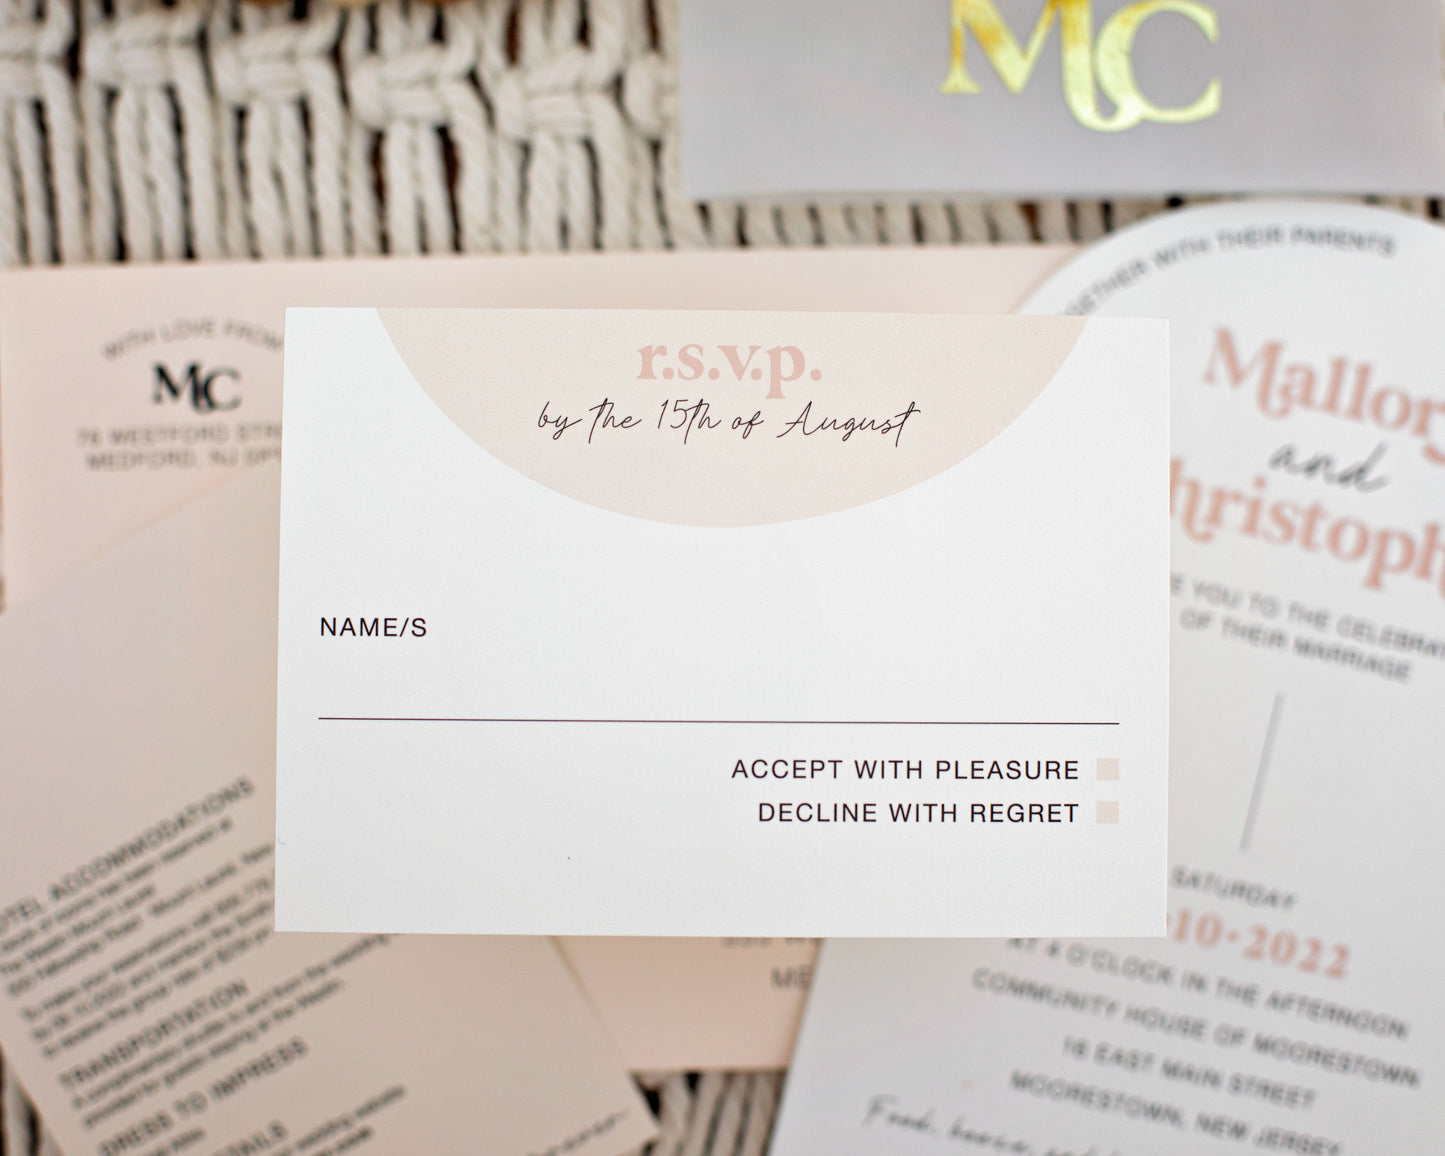 arch rsvp card for wedding invitation